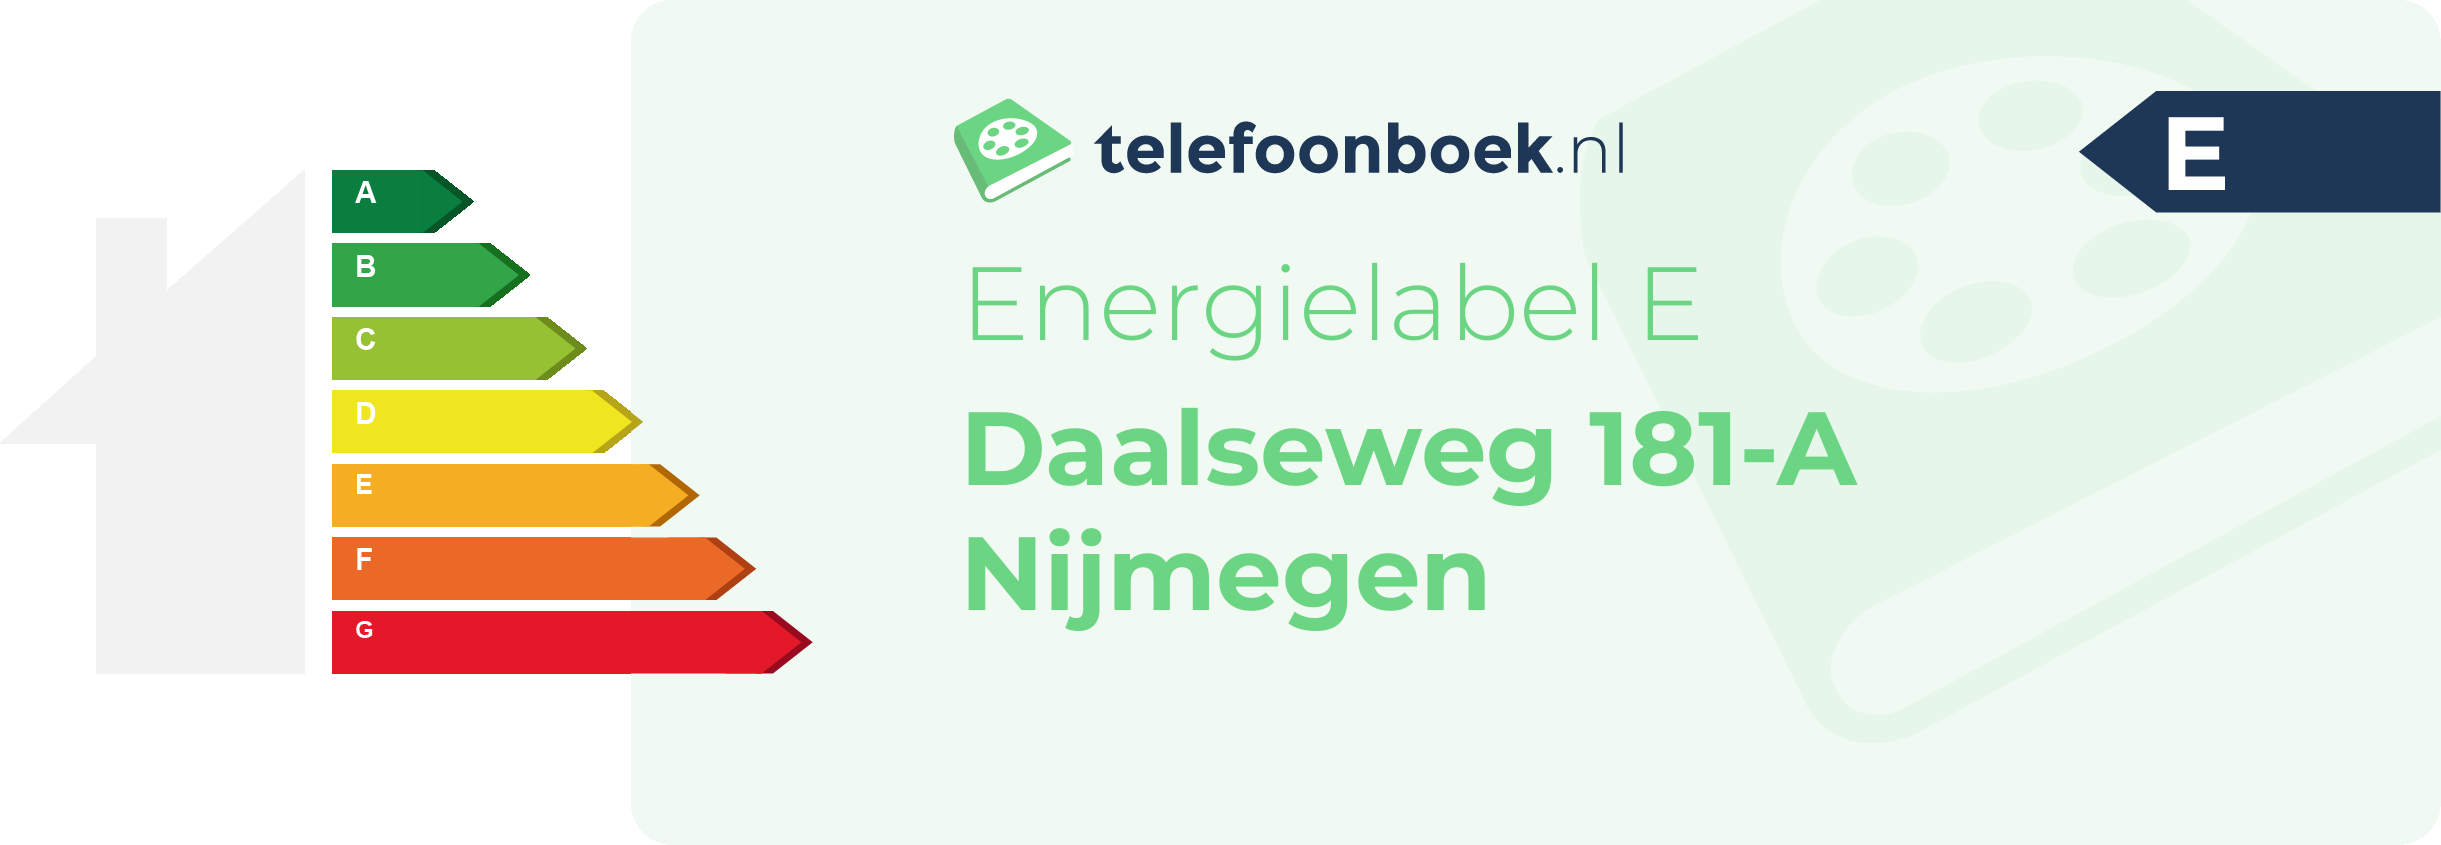 Energielabel Daalseweg 181-A Nijmegen